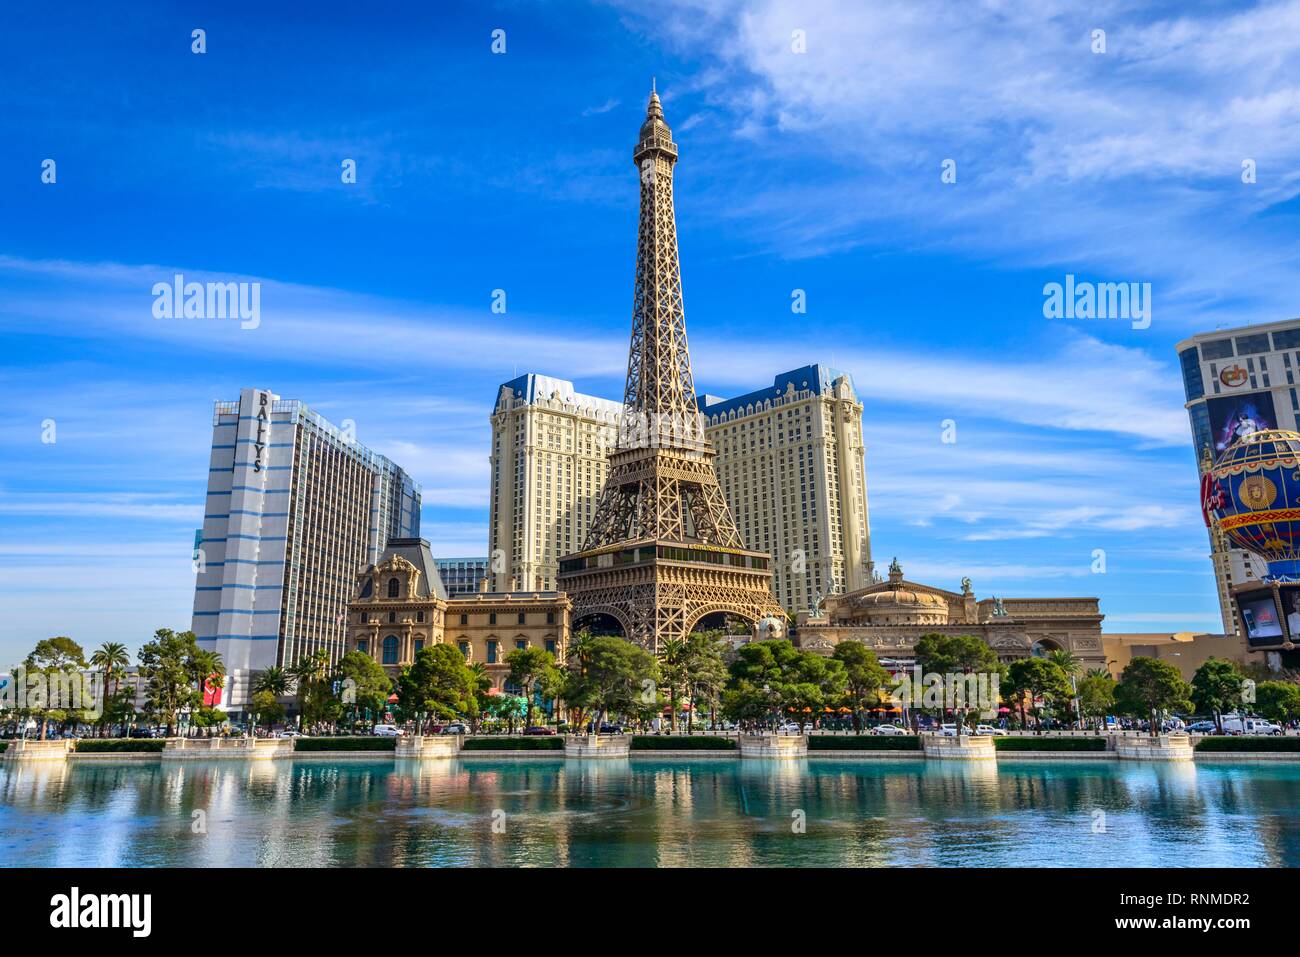 Eiffel Tower at Paris Hotel in Las Vegas